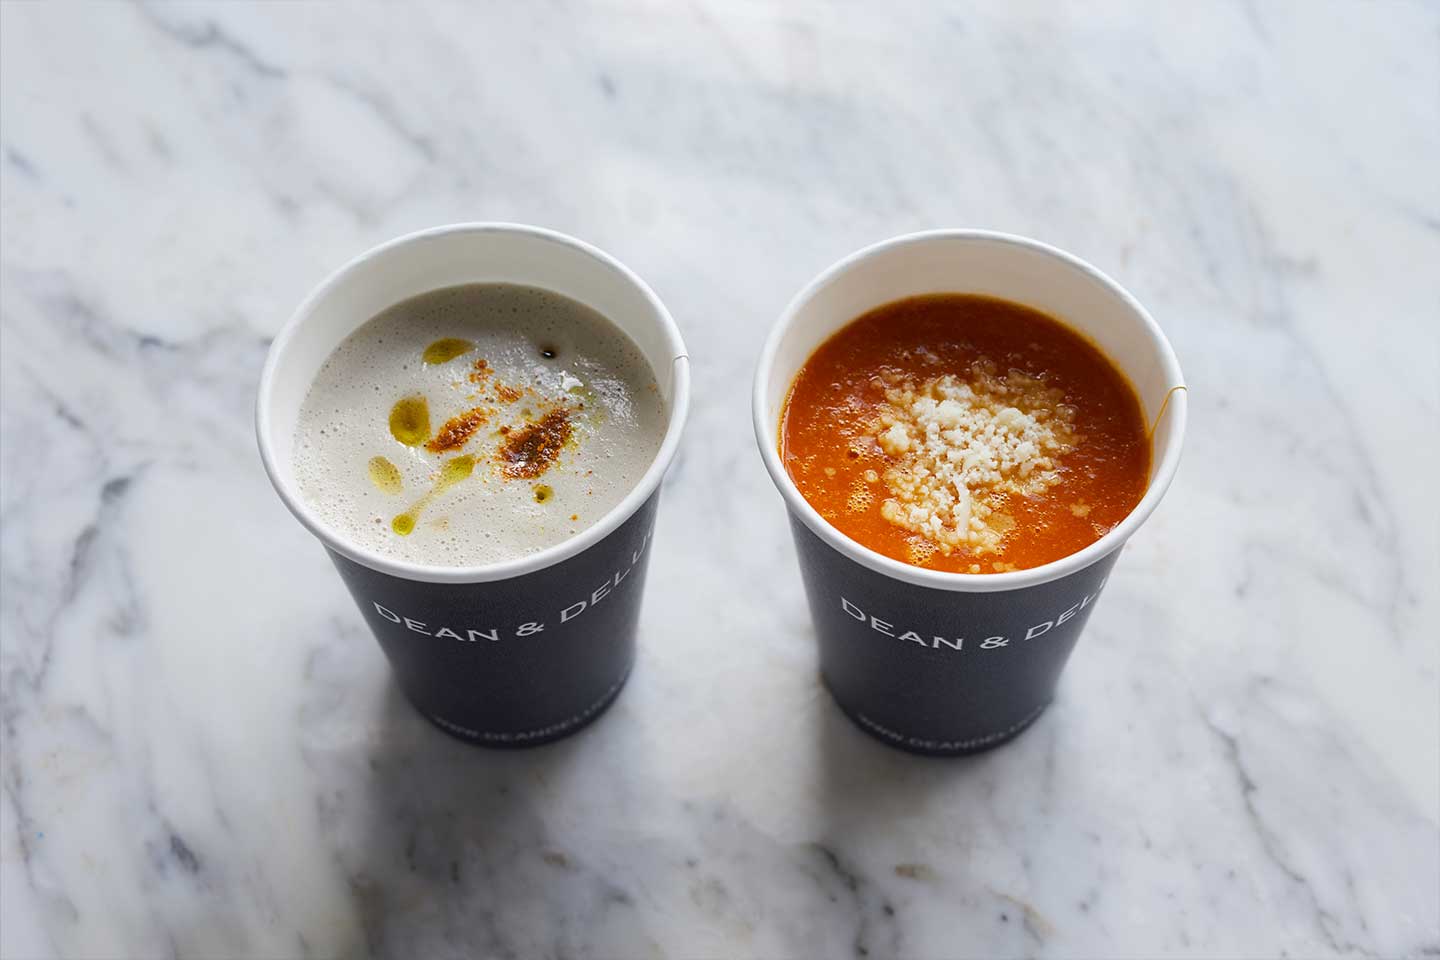 Dean Deluca Cafe Winter Soup 温もりを味わう 冬のスープ 株式会社ウェルカムのプレスリリース